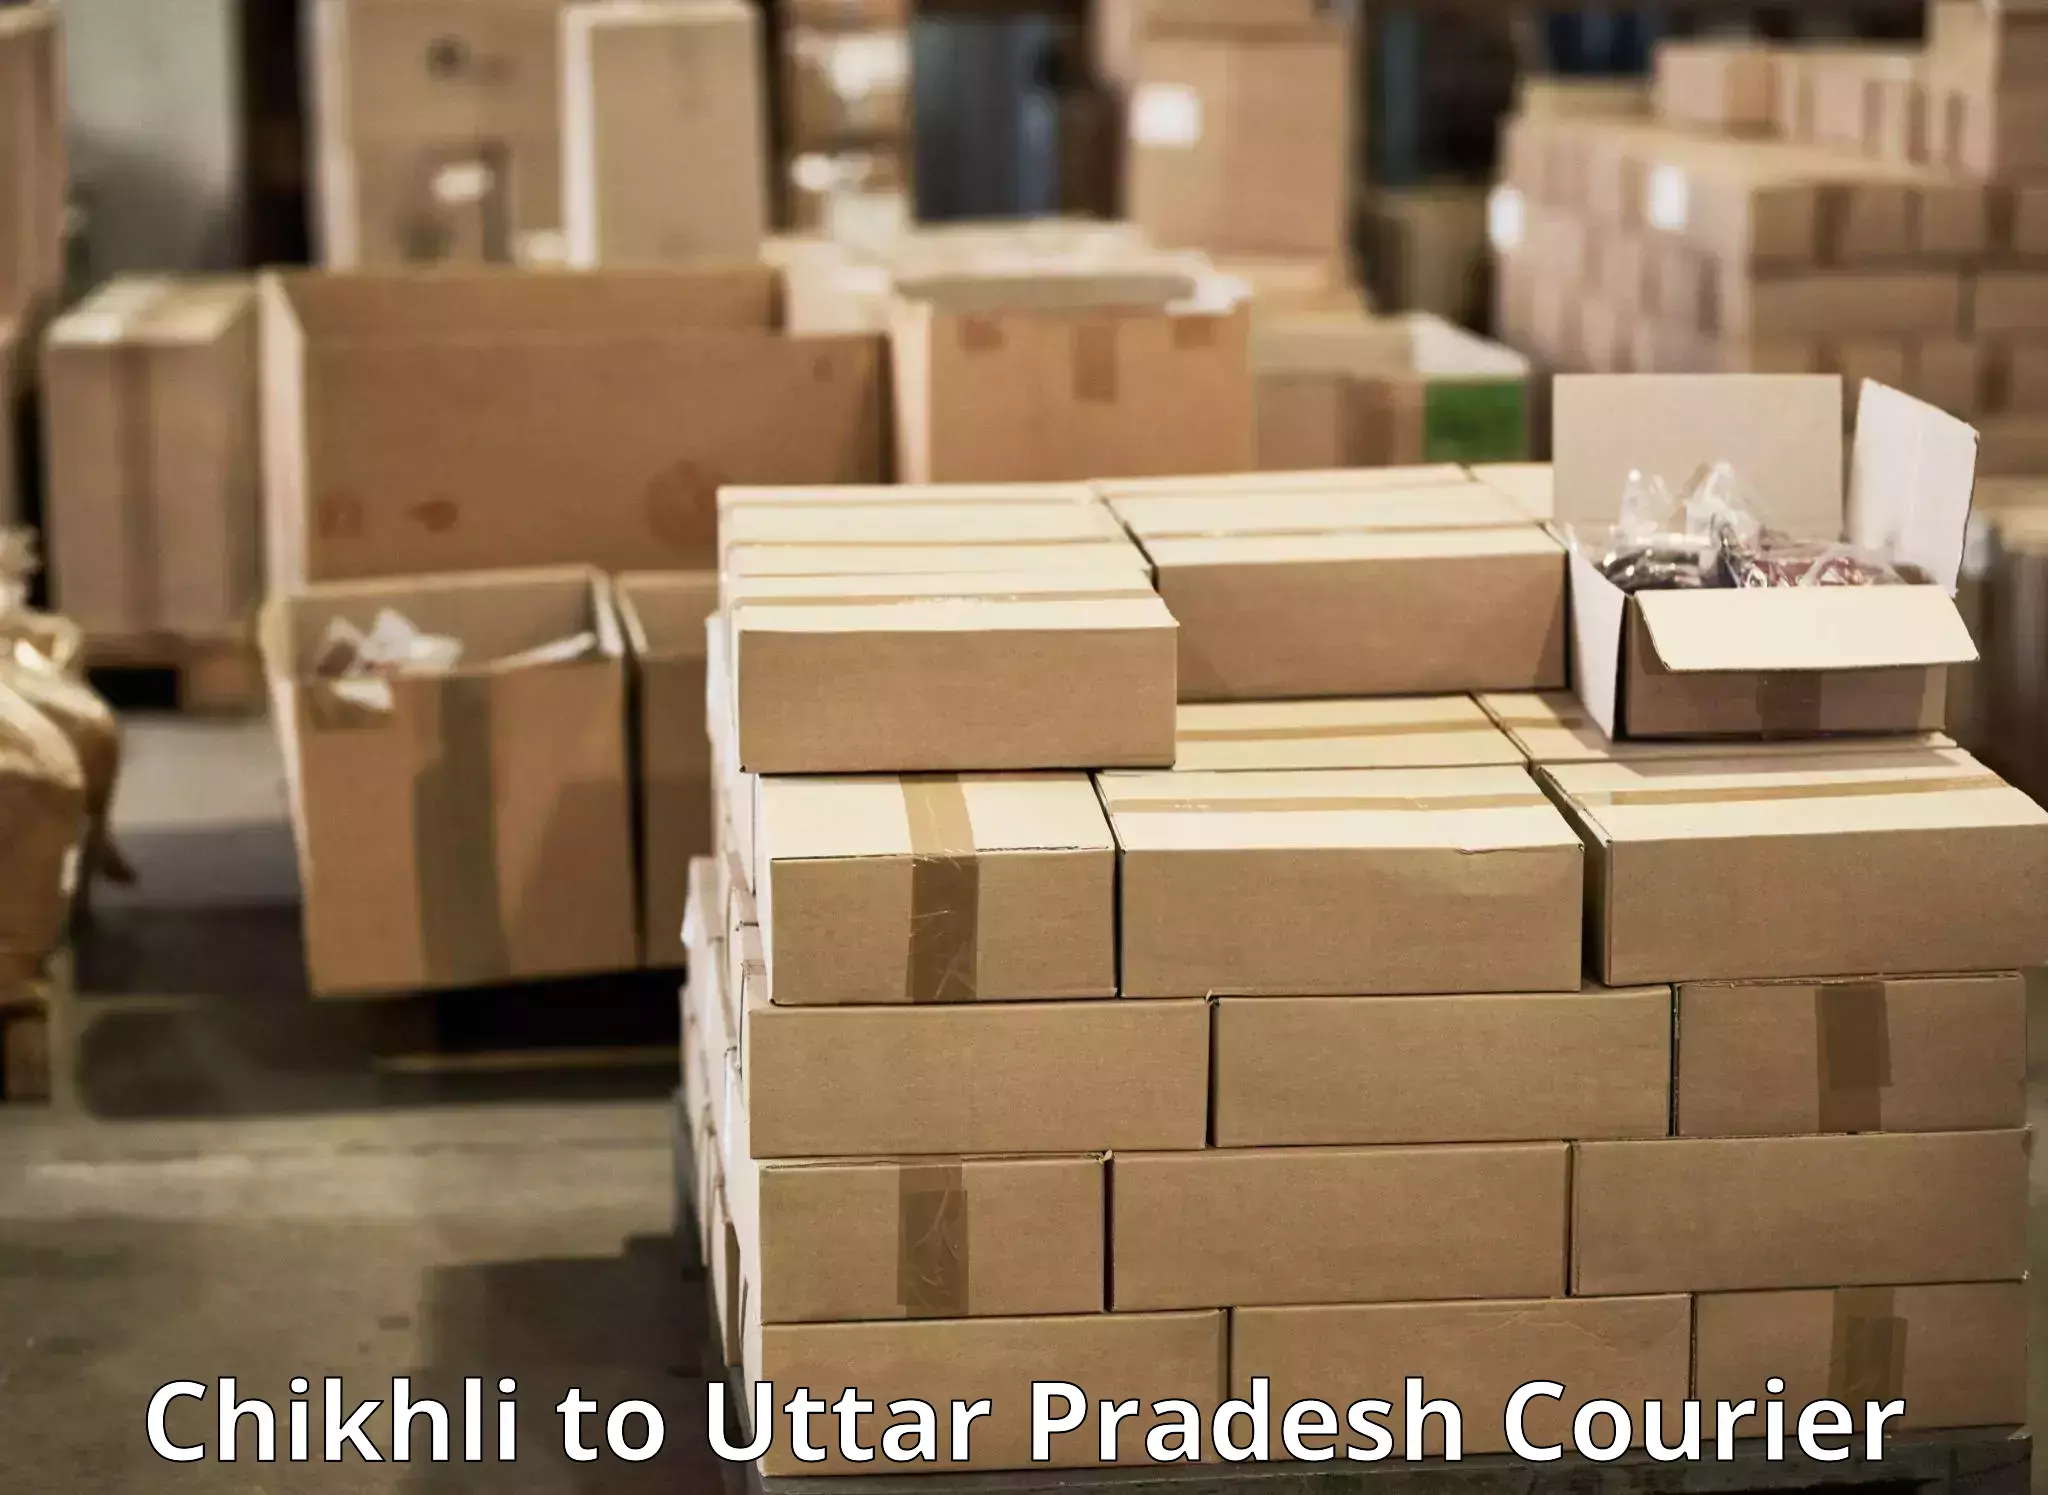 High-capacity parcel service Chikhli to Baksha